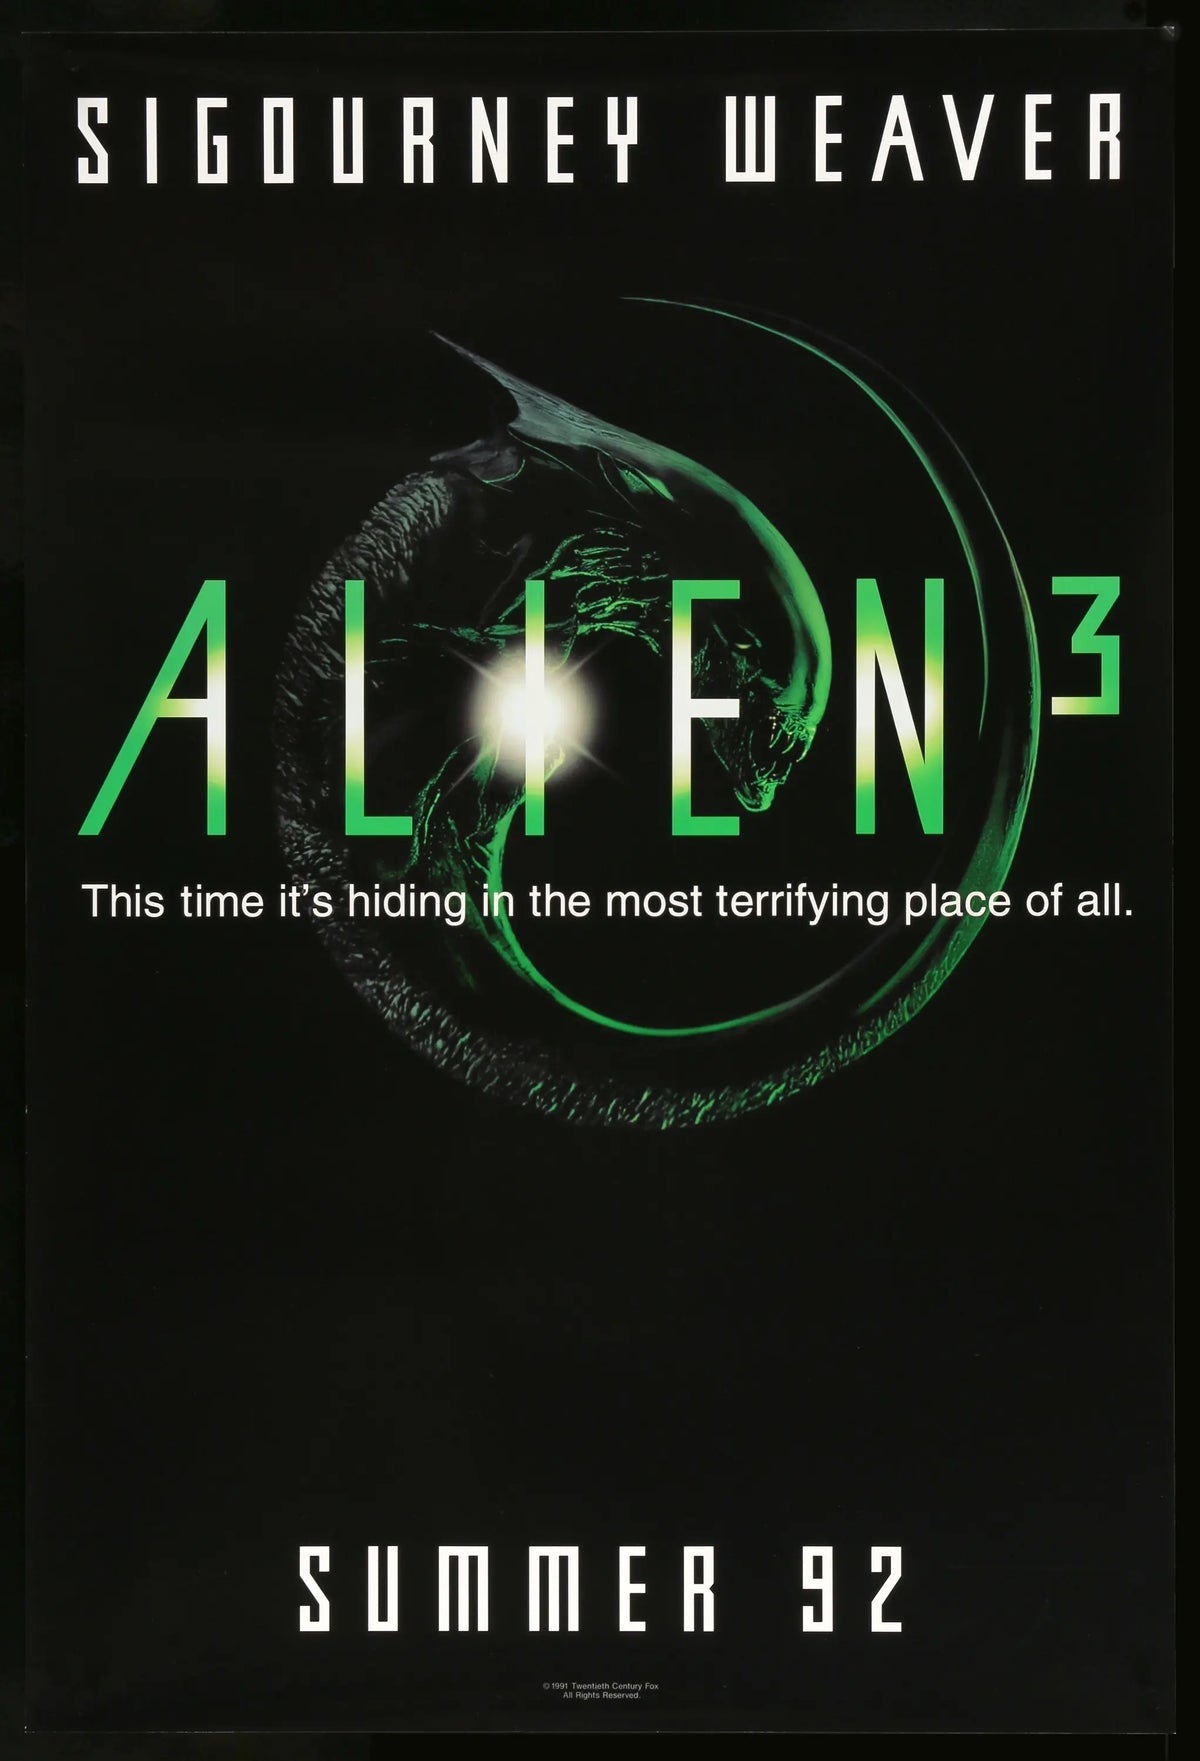 Alien 3 (1992) original movie poster for sale at Original Film Art